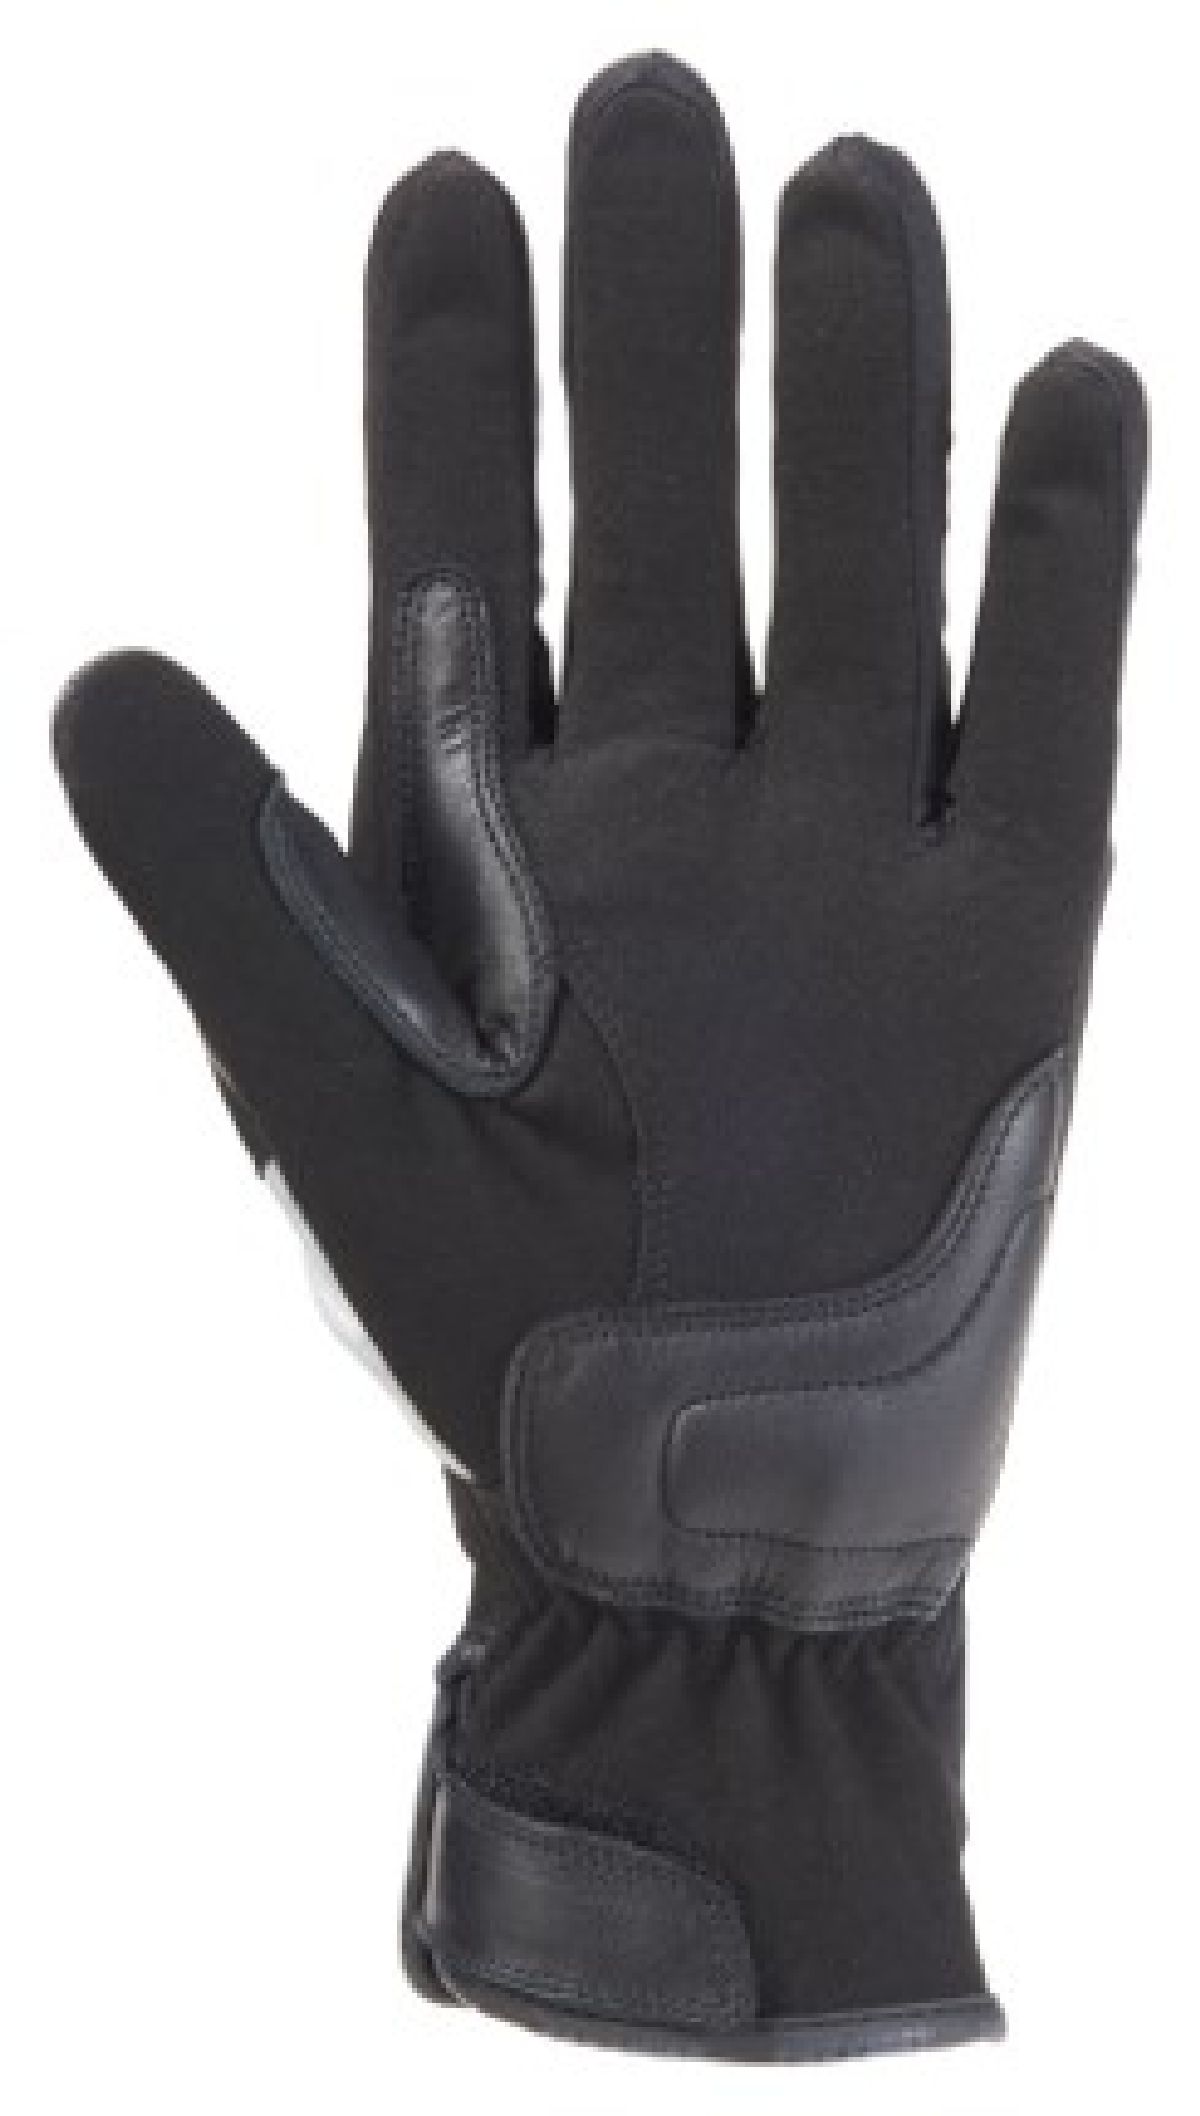 Easy II Handschuhe schwarz/grau XL